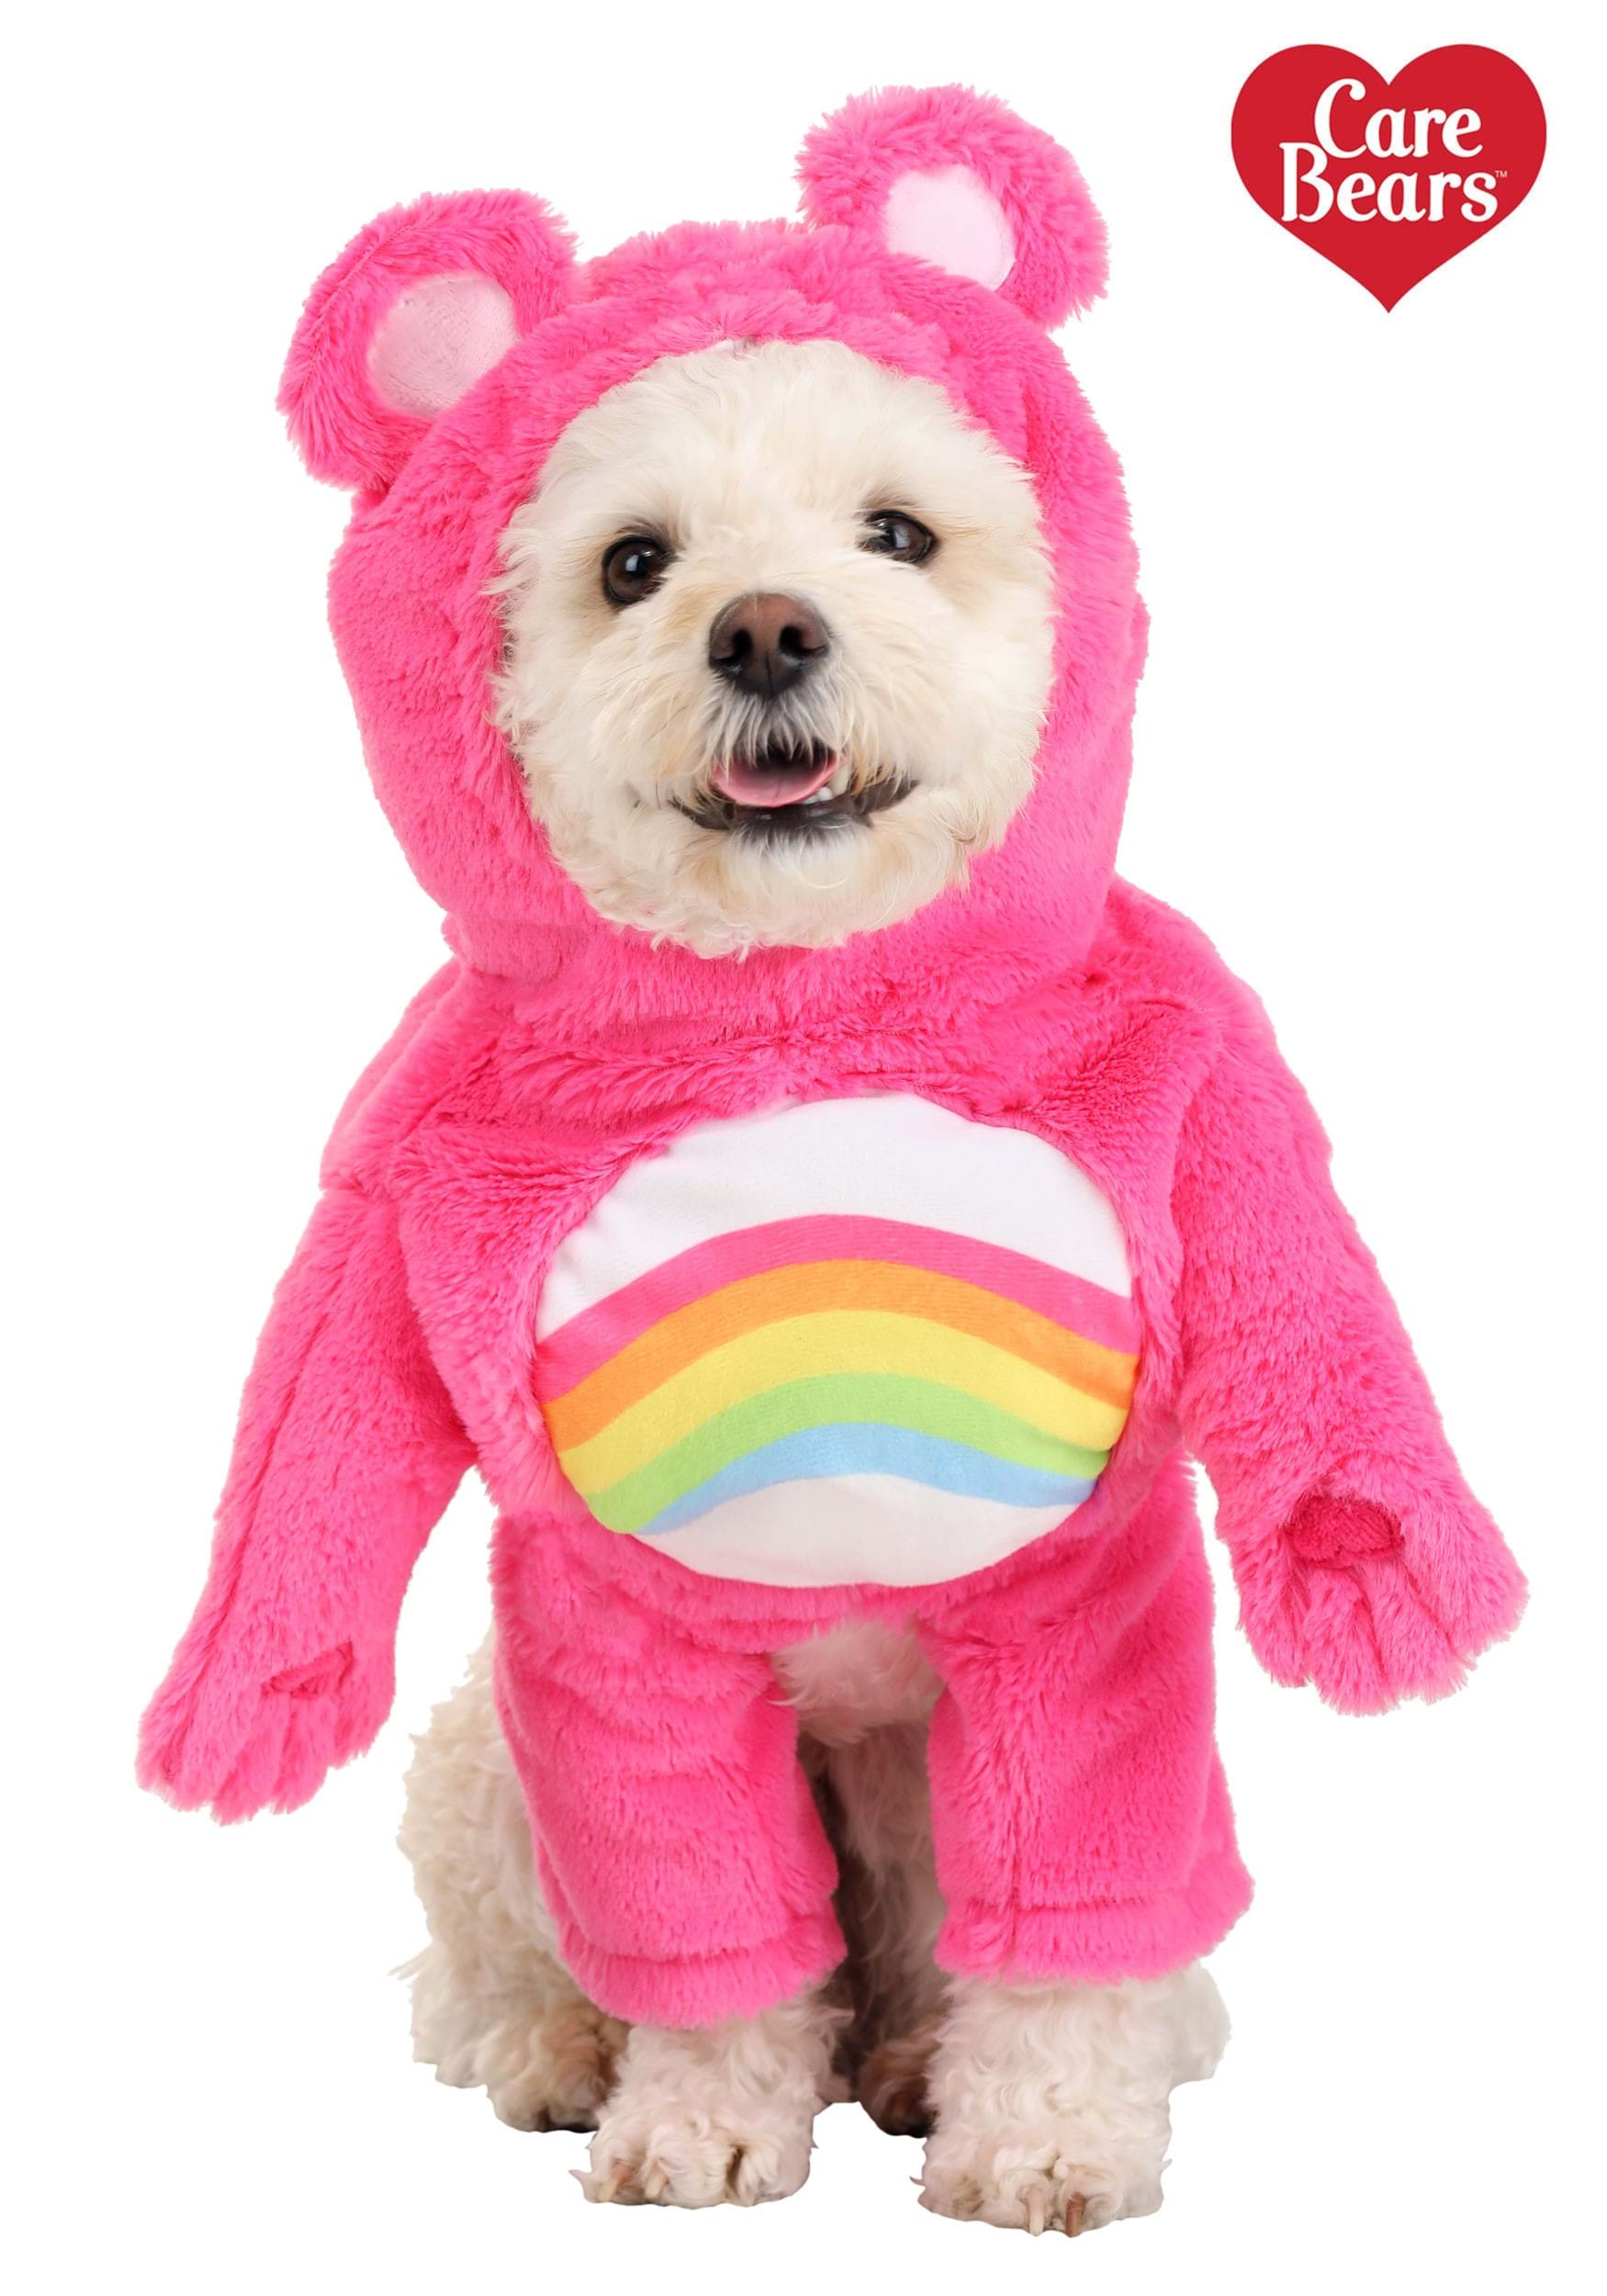 https://images.halloweencostumes.com/products/67565/1-1/care-bears-cheer-bear-dog-costume.jpg